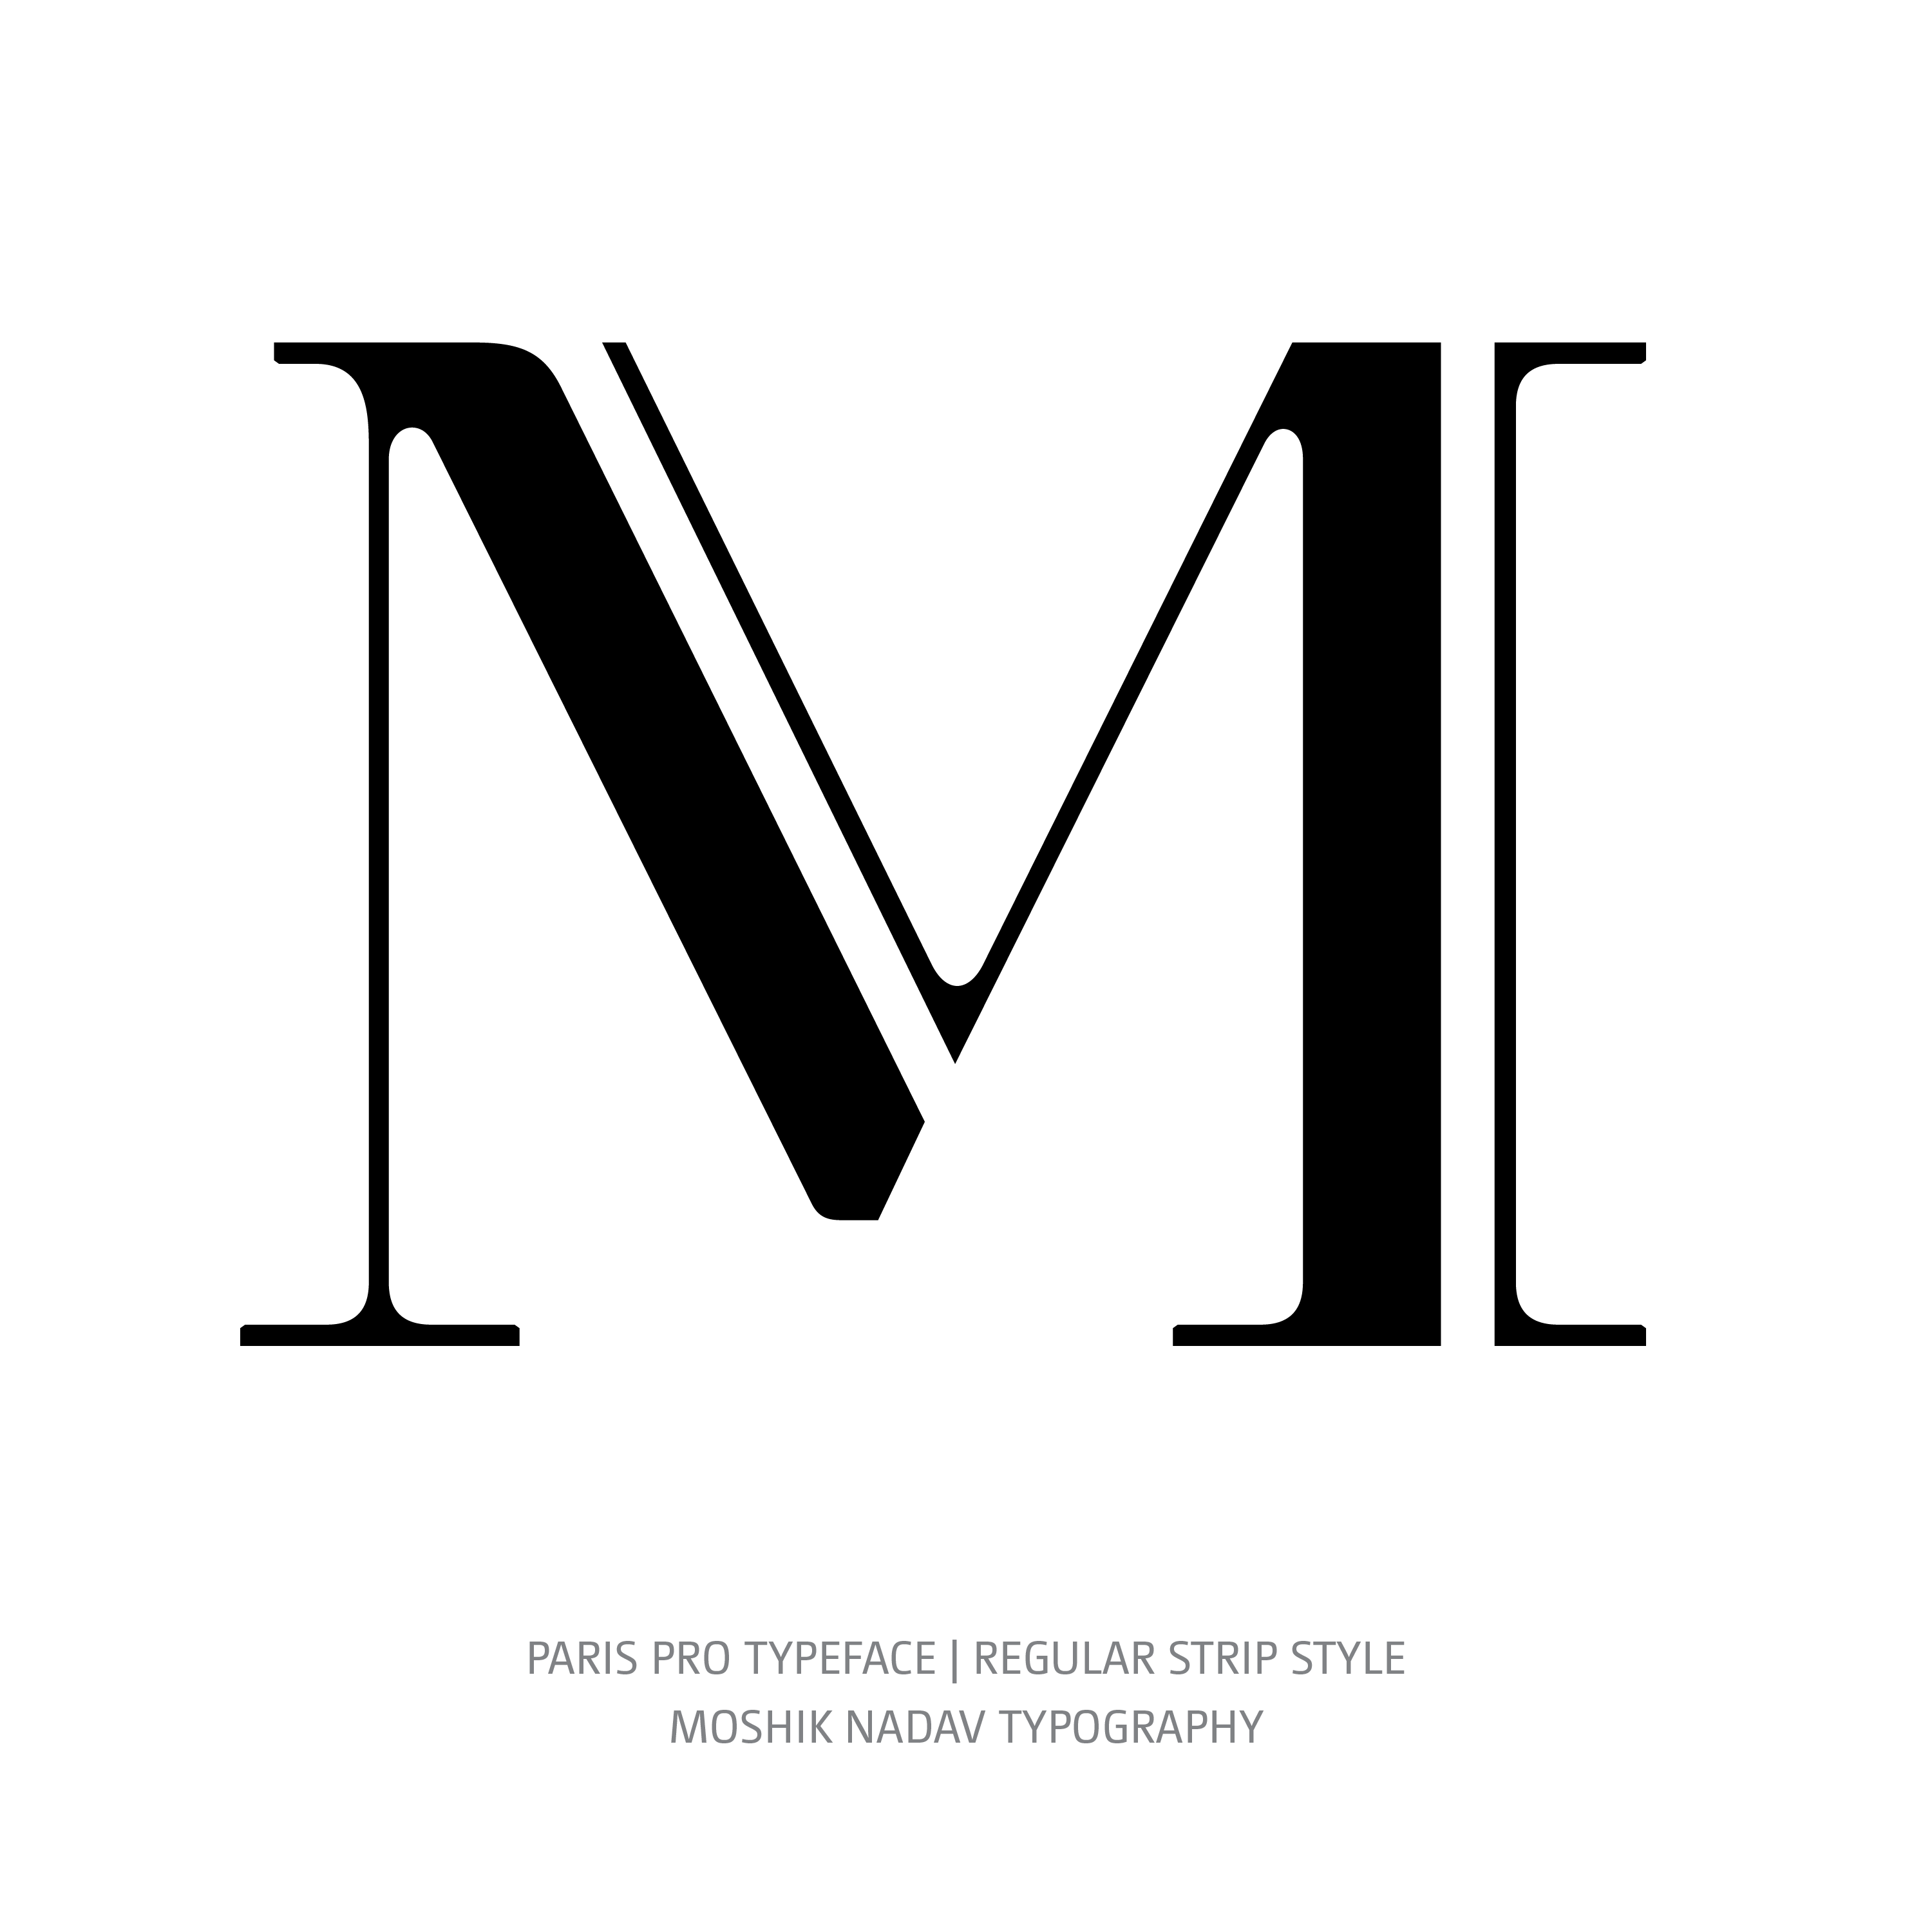 Paris Pro Typeface Regular Strip M